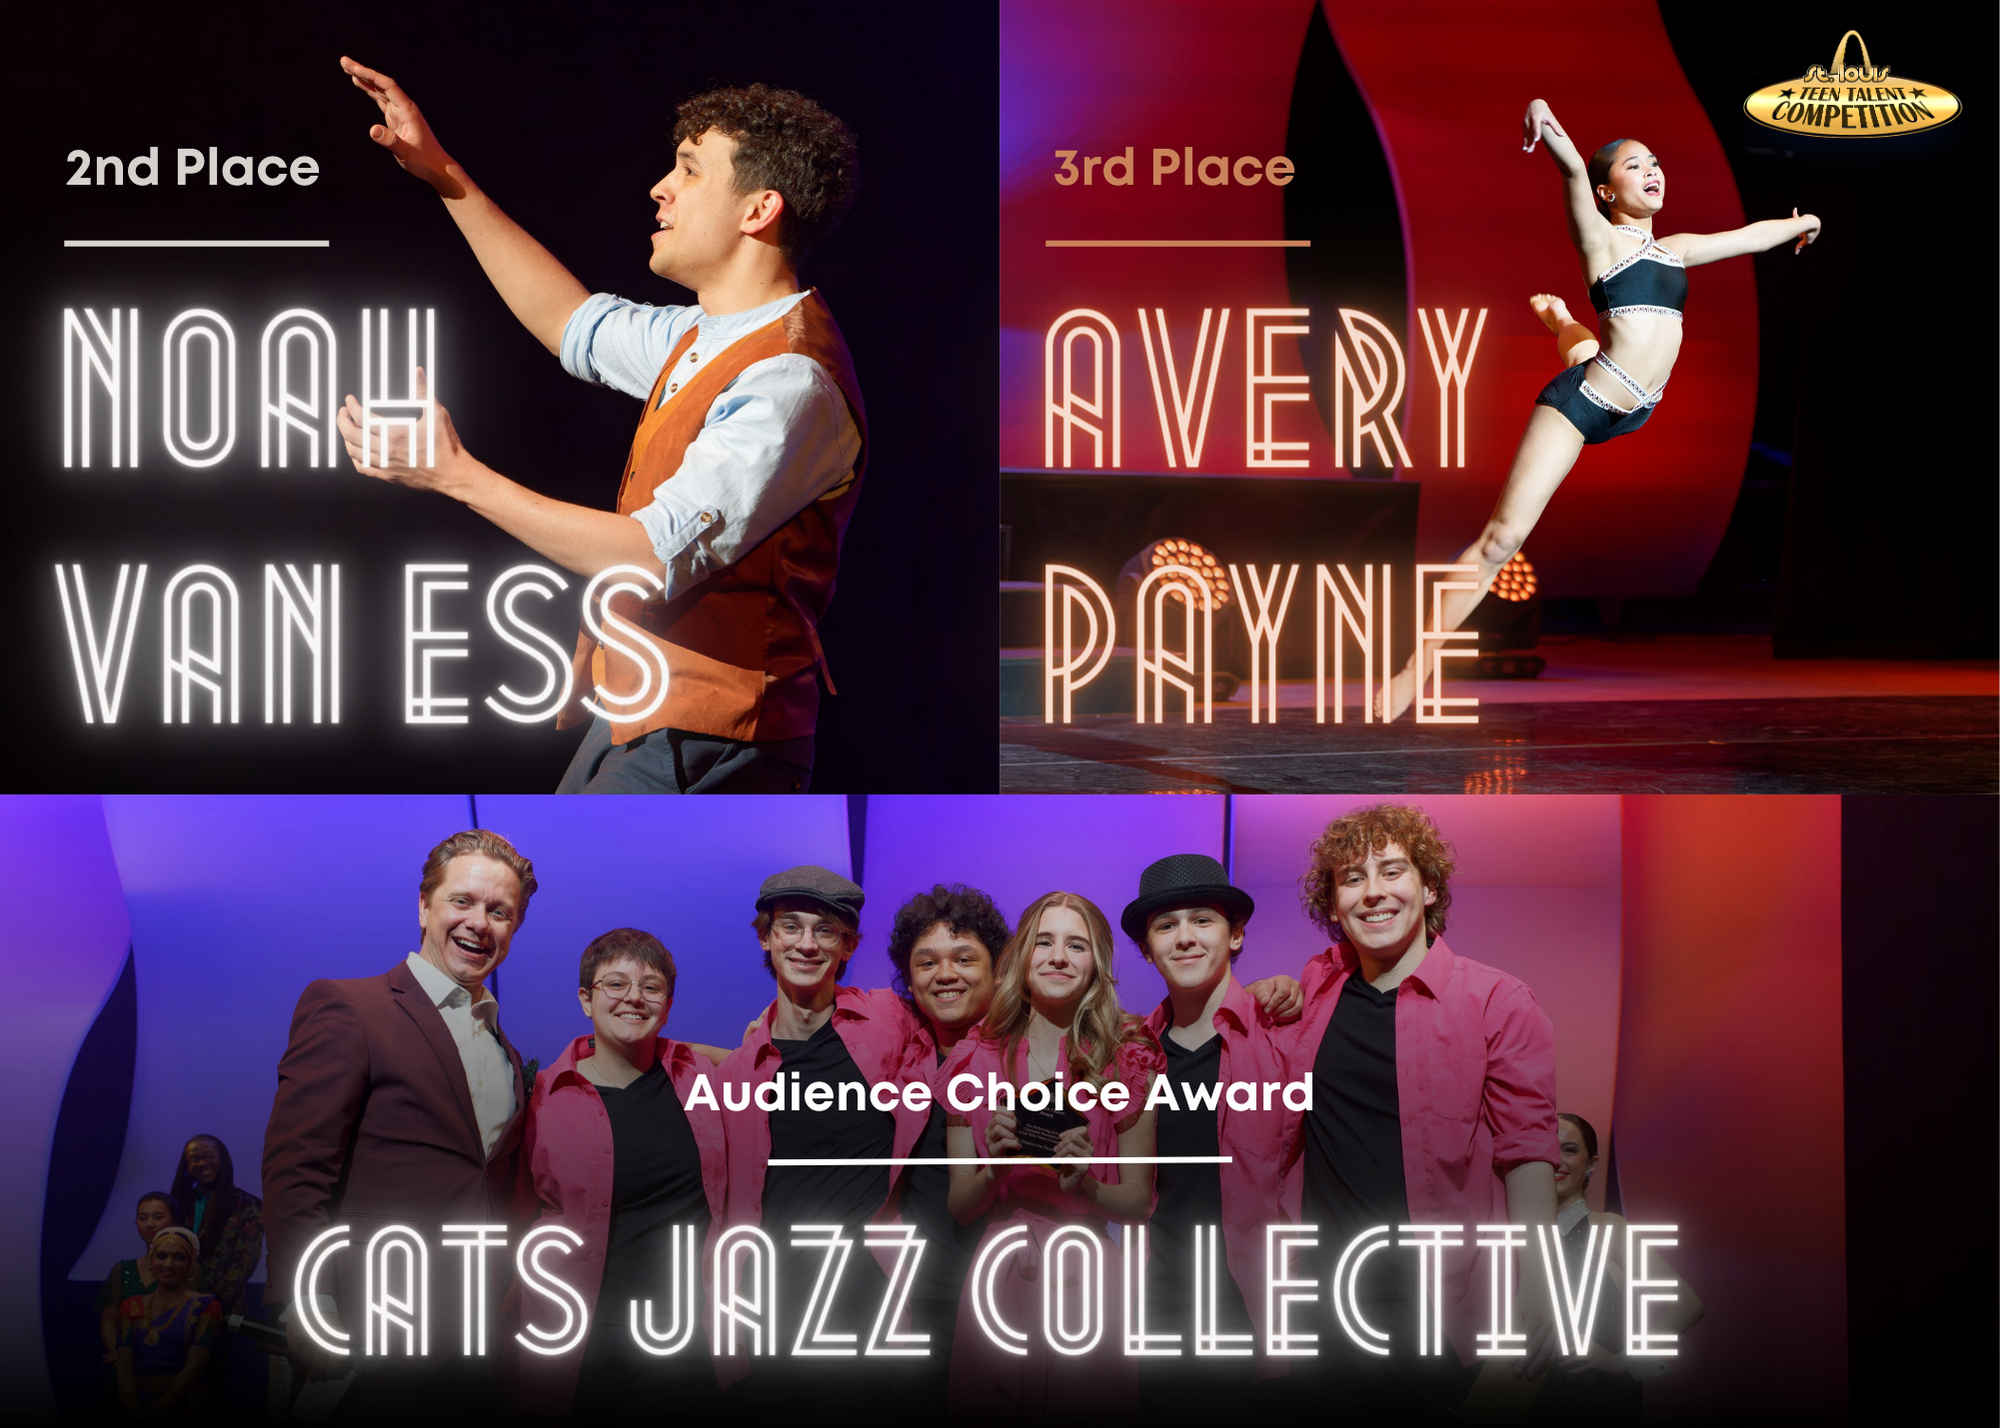 Teen Talent 2nd Noah Van Ess 3rd Avery Payne Audience Award Cats Jazz Collective